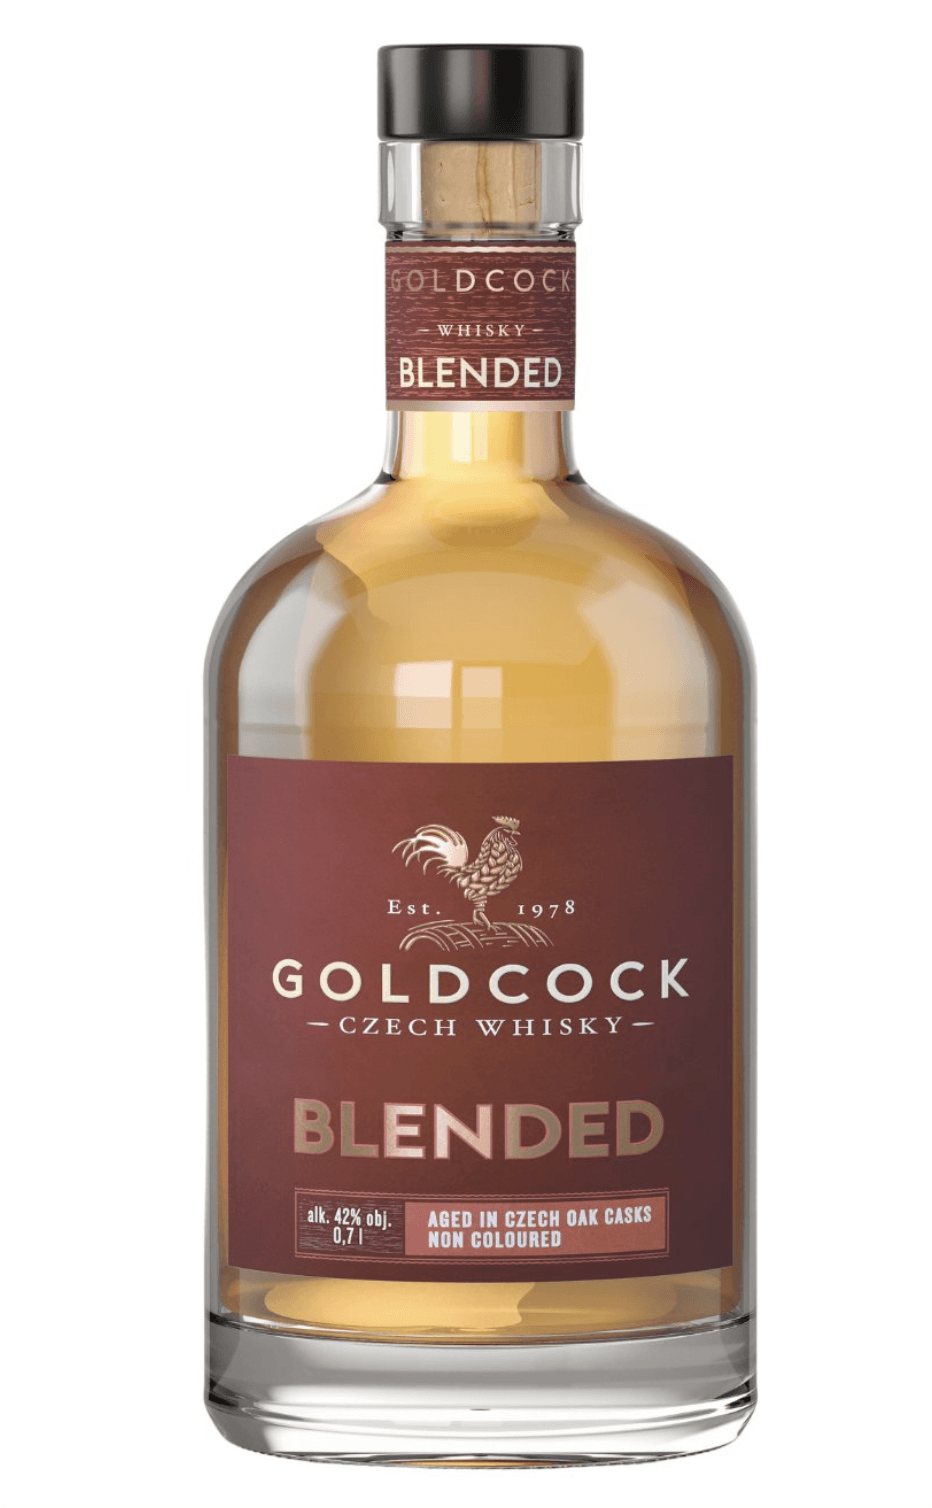 Goldcock Gold Cock BLENDED WHISKY